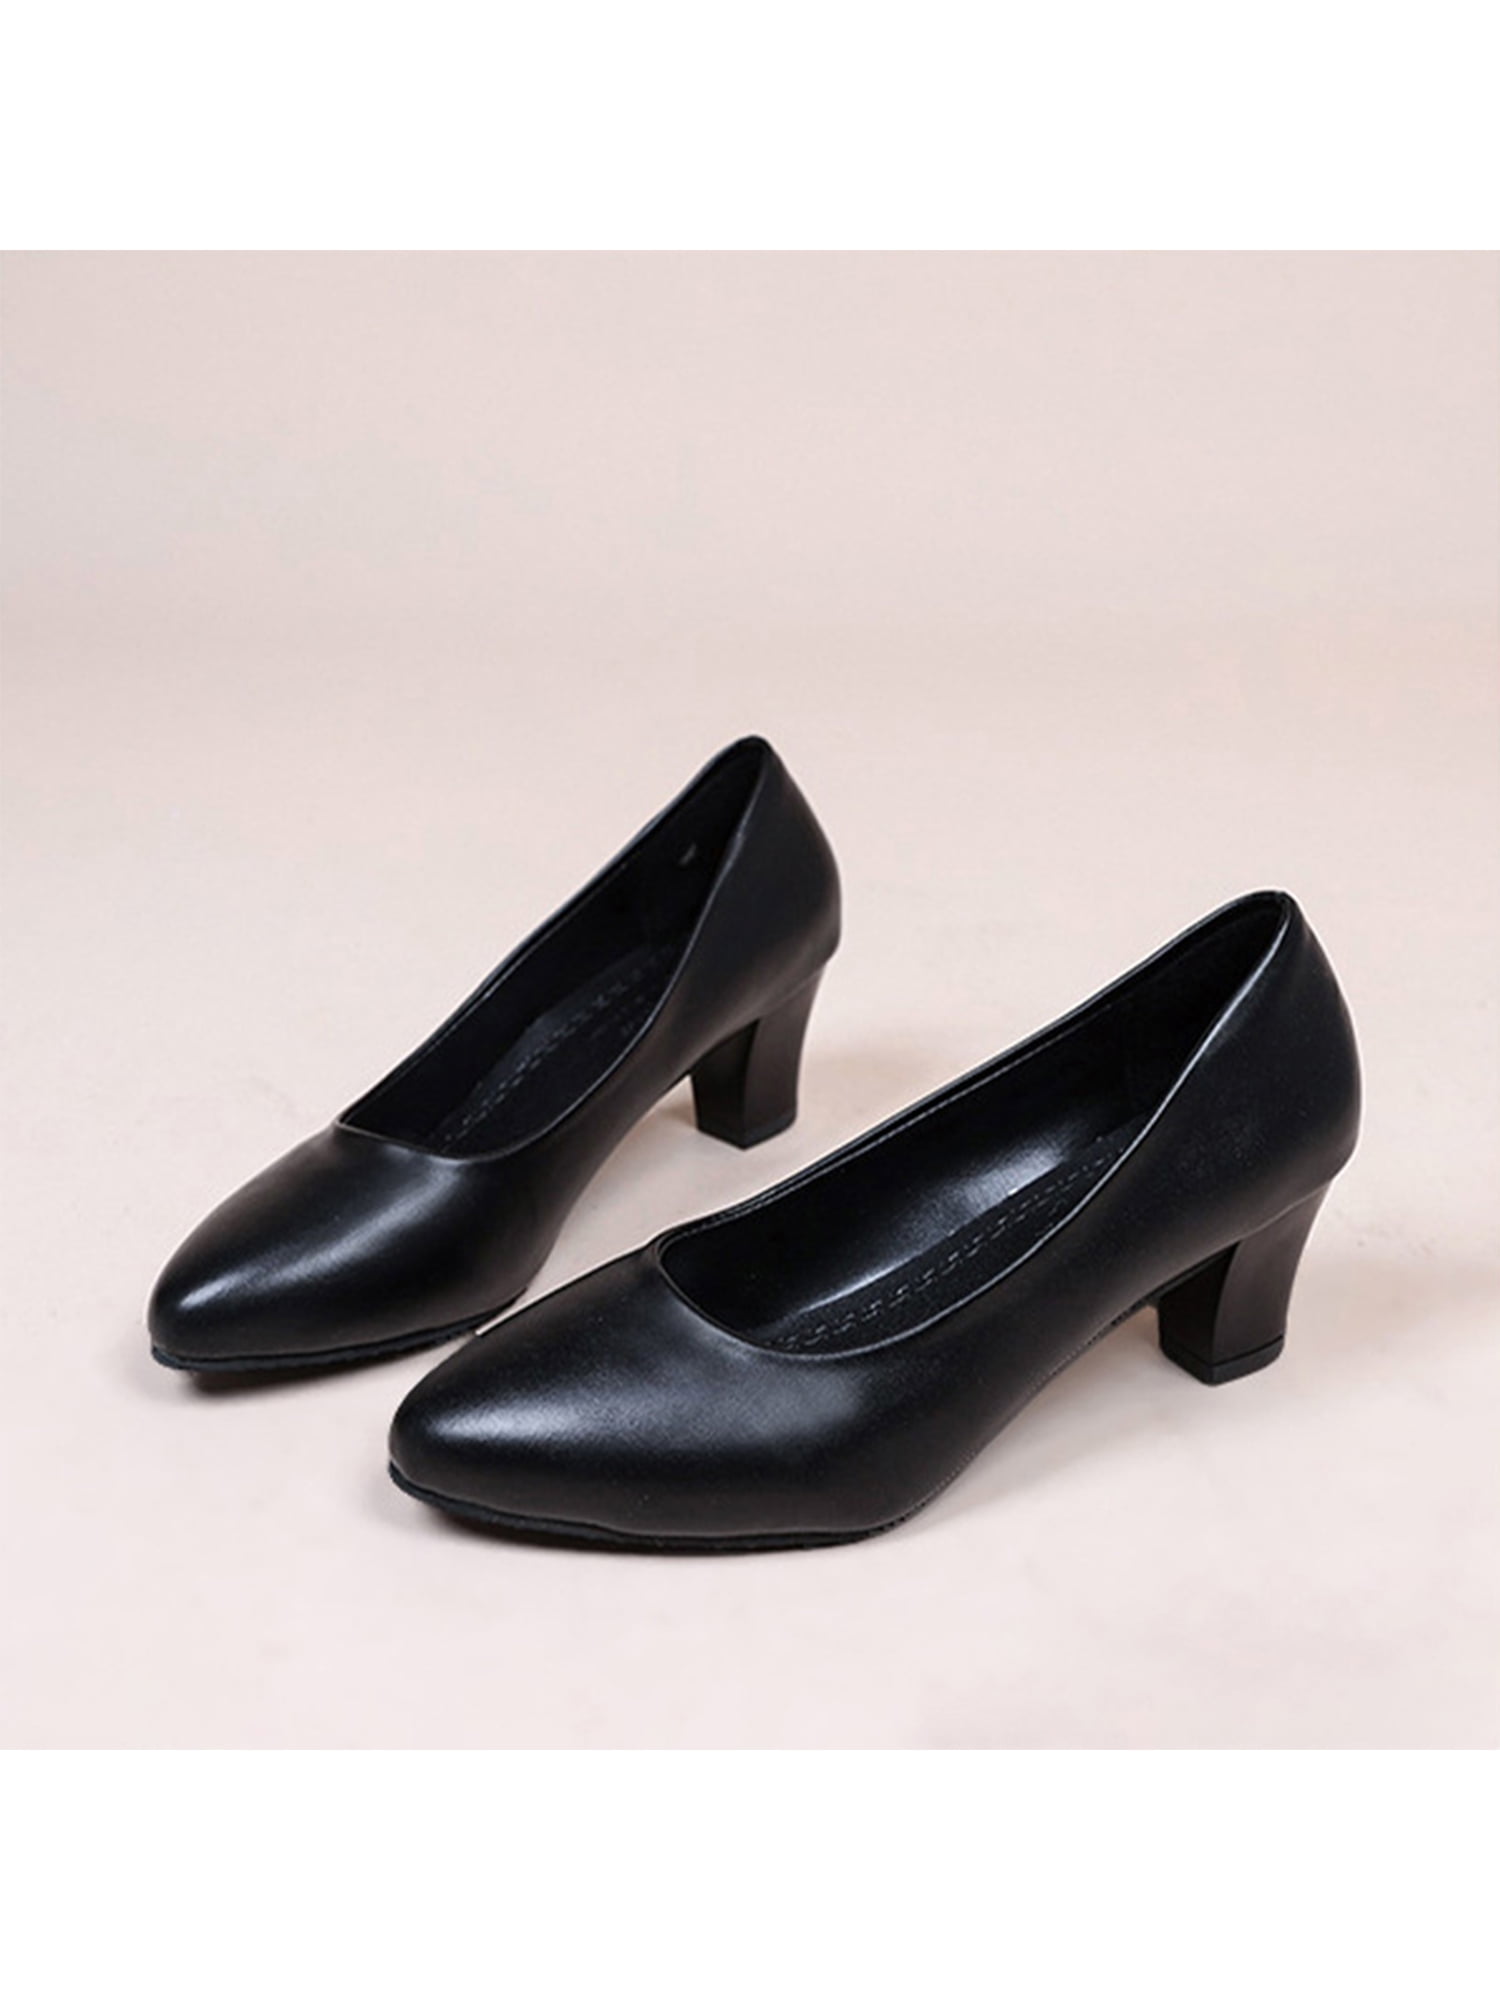 Gomelly Women Chunky Low Heels Closed Toe Casual Dress Pumps Shoes Black  5.5 - Walmart.com